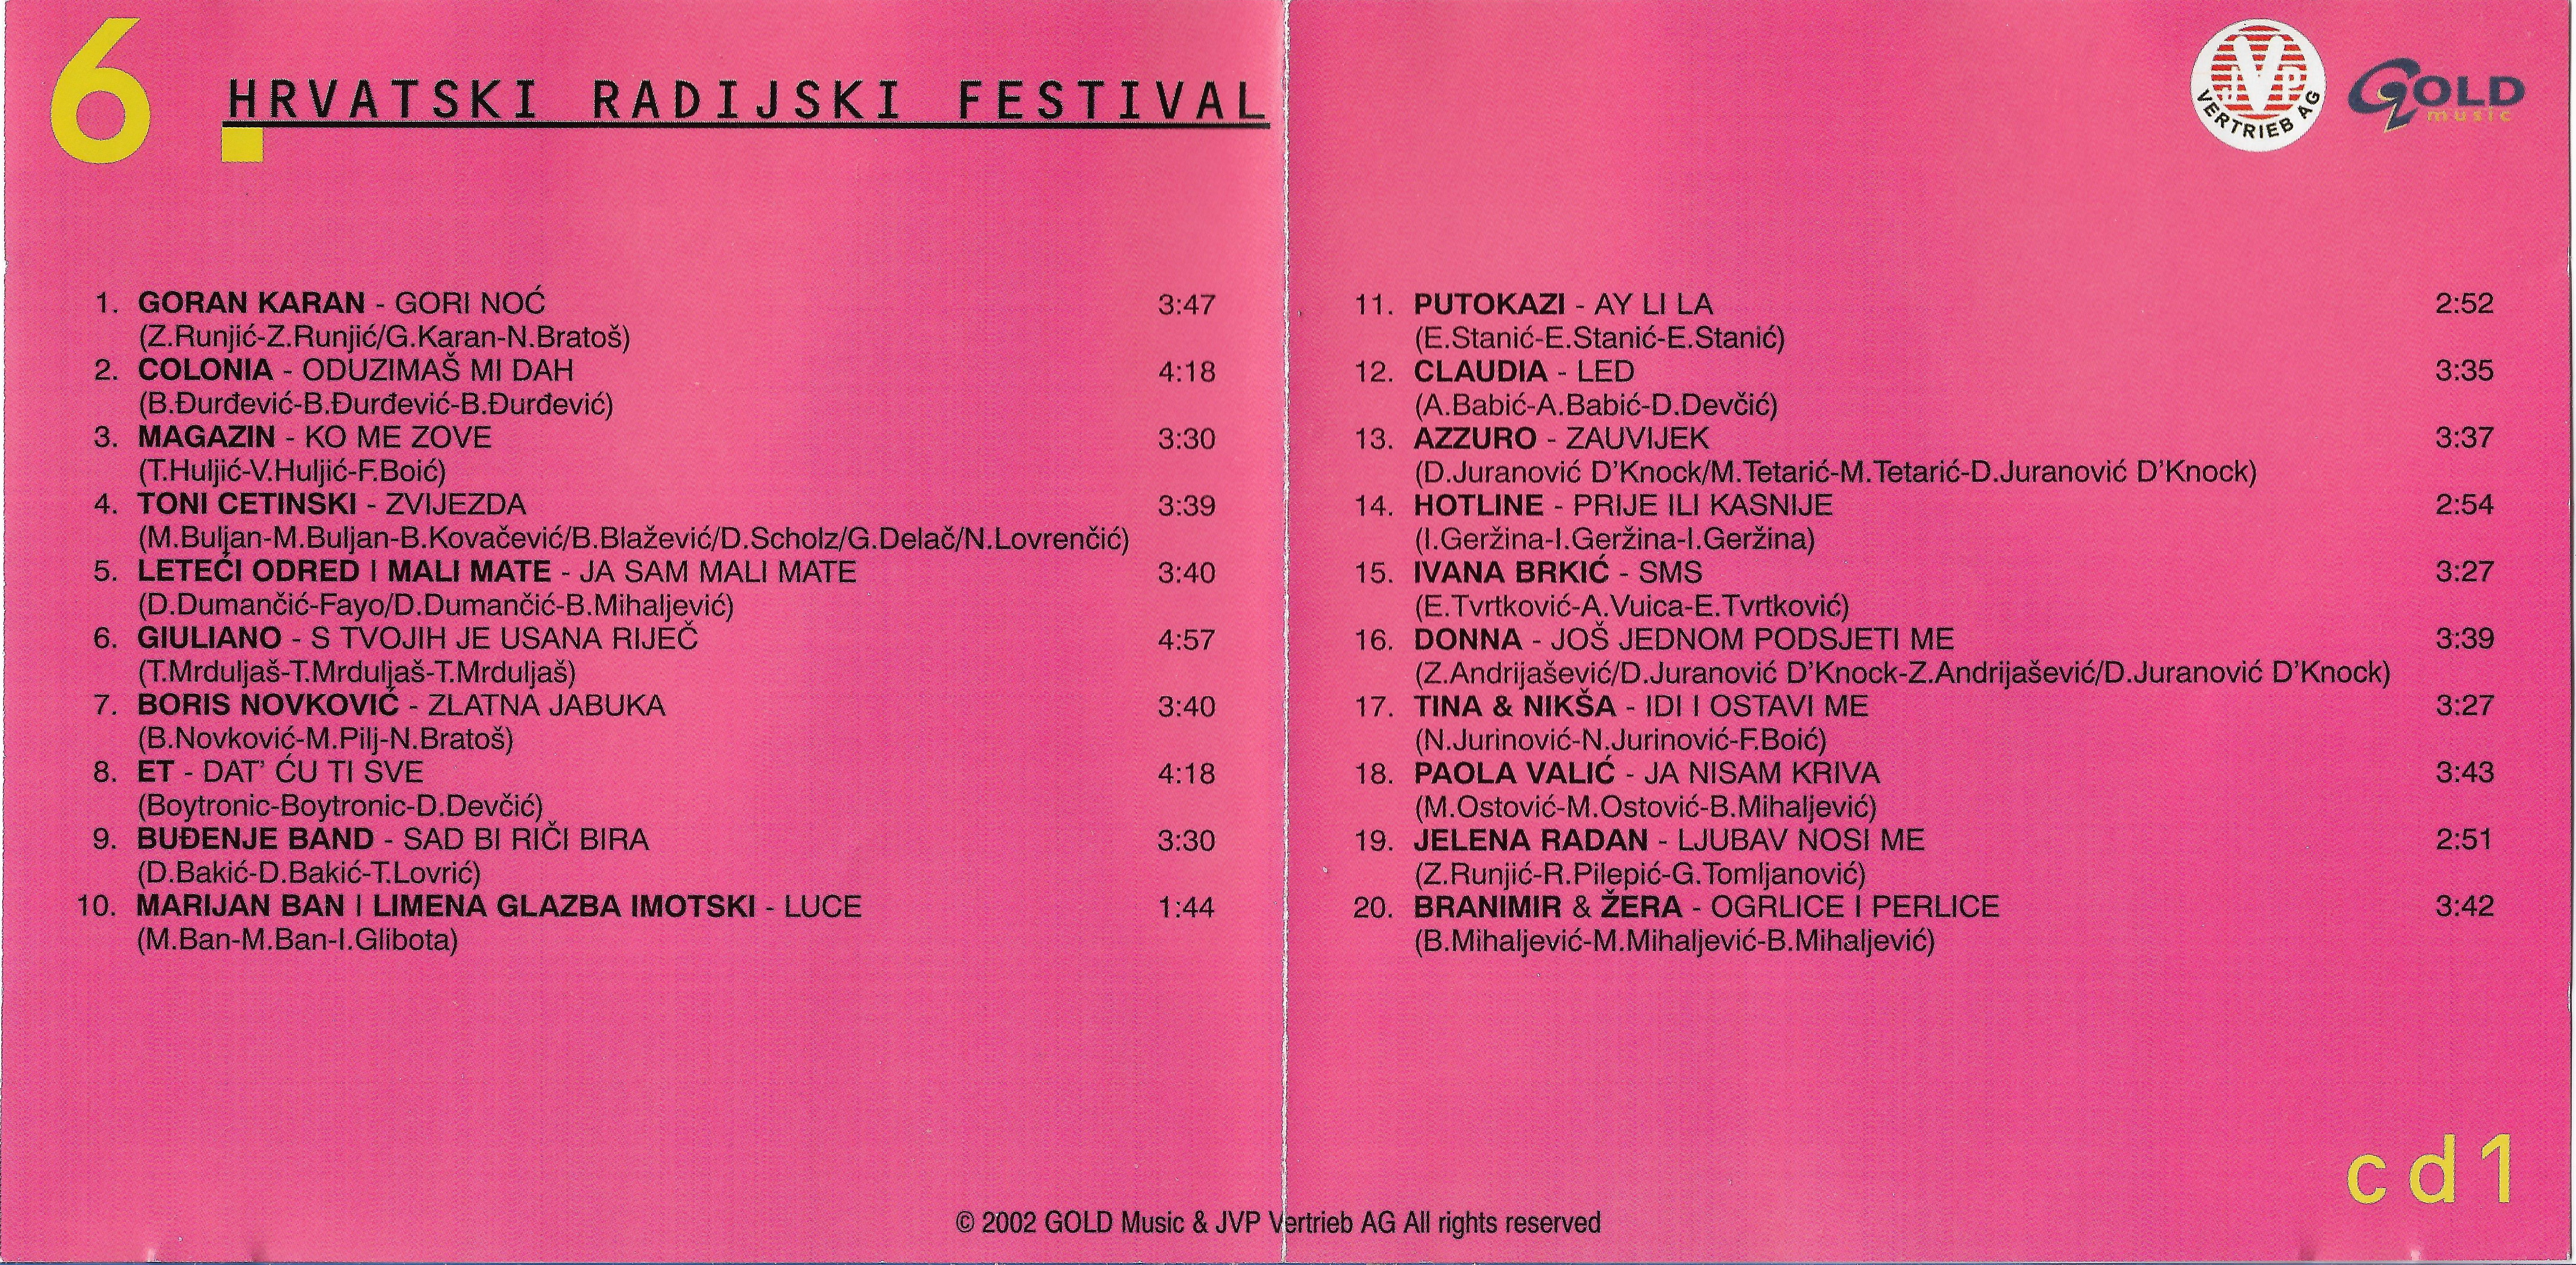 Vodice 2002 CD 1 2